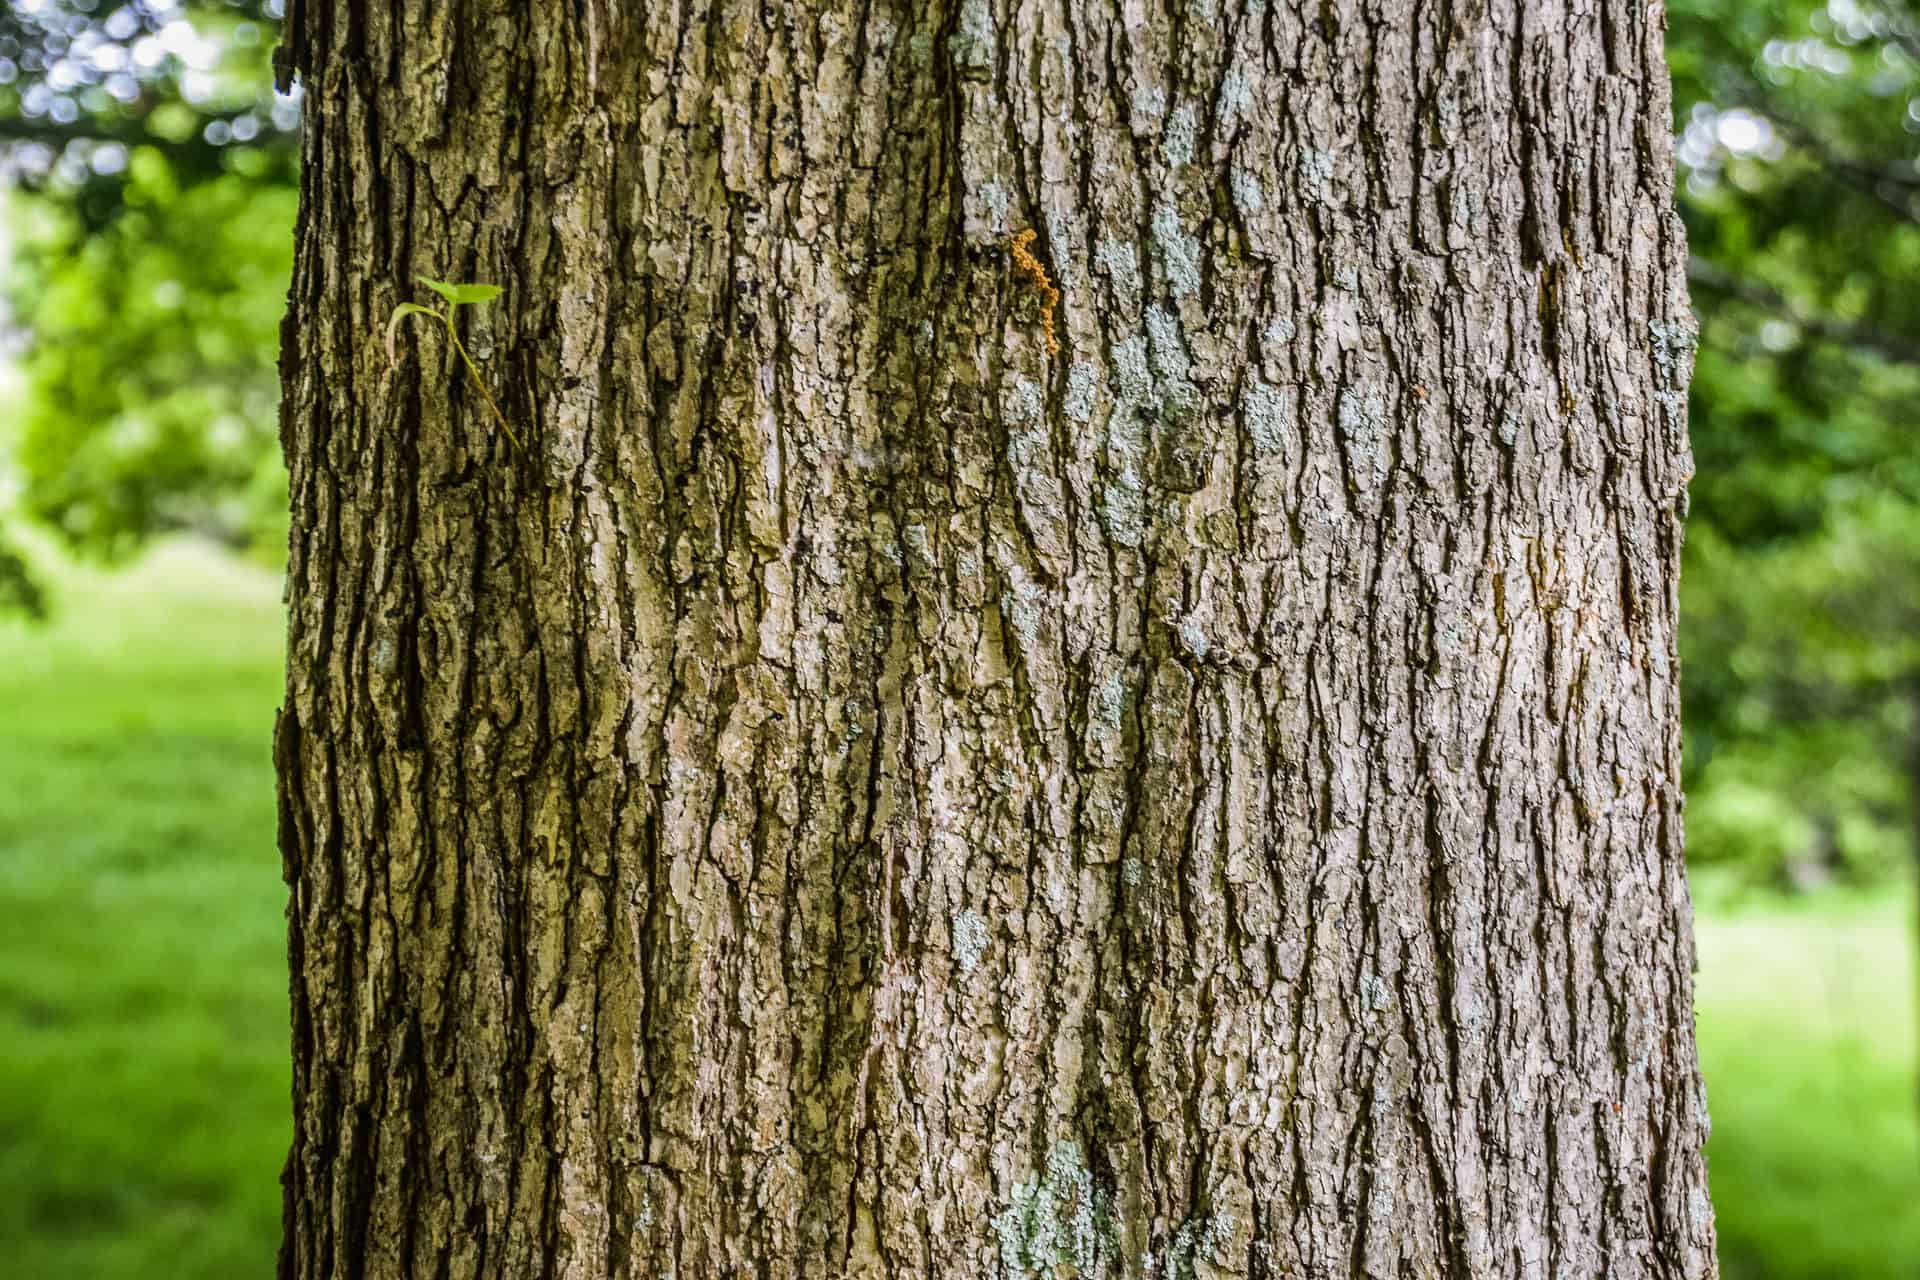 Chinkapin Oak trunk